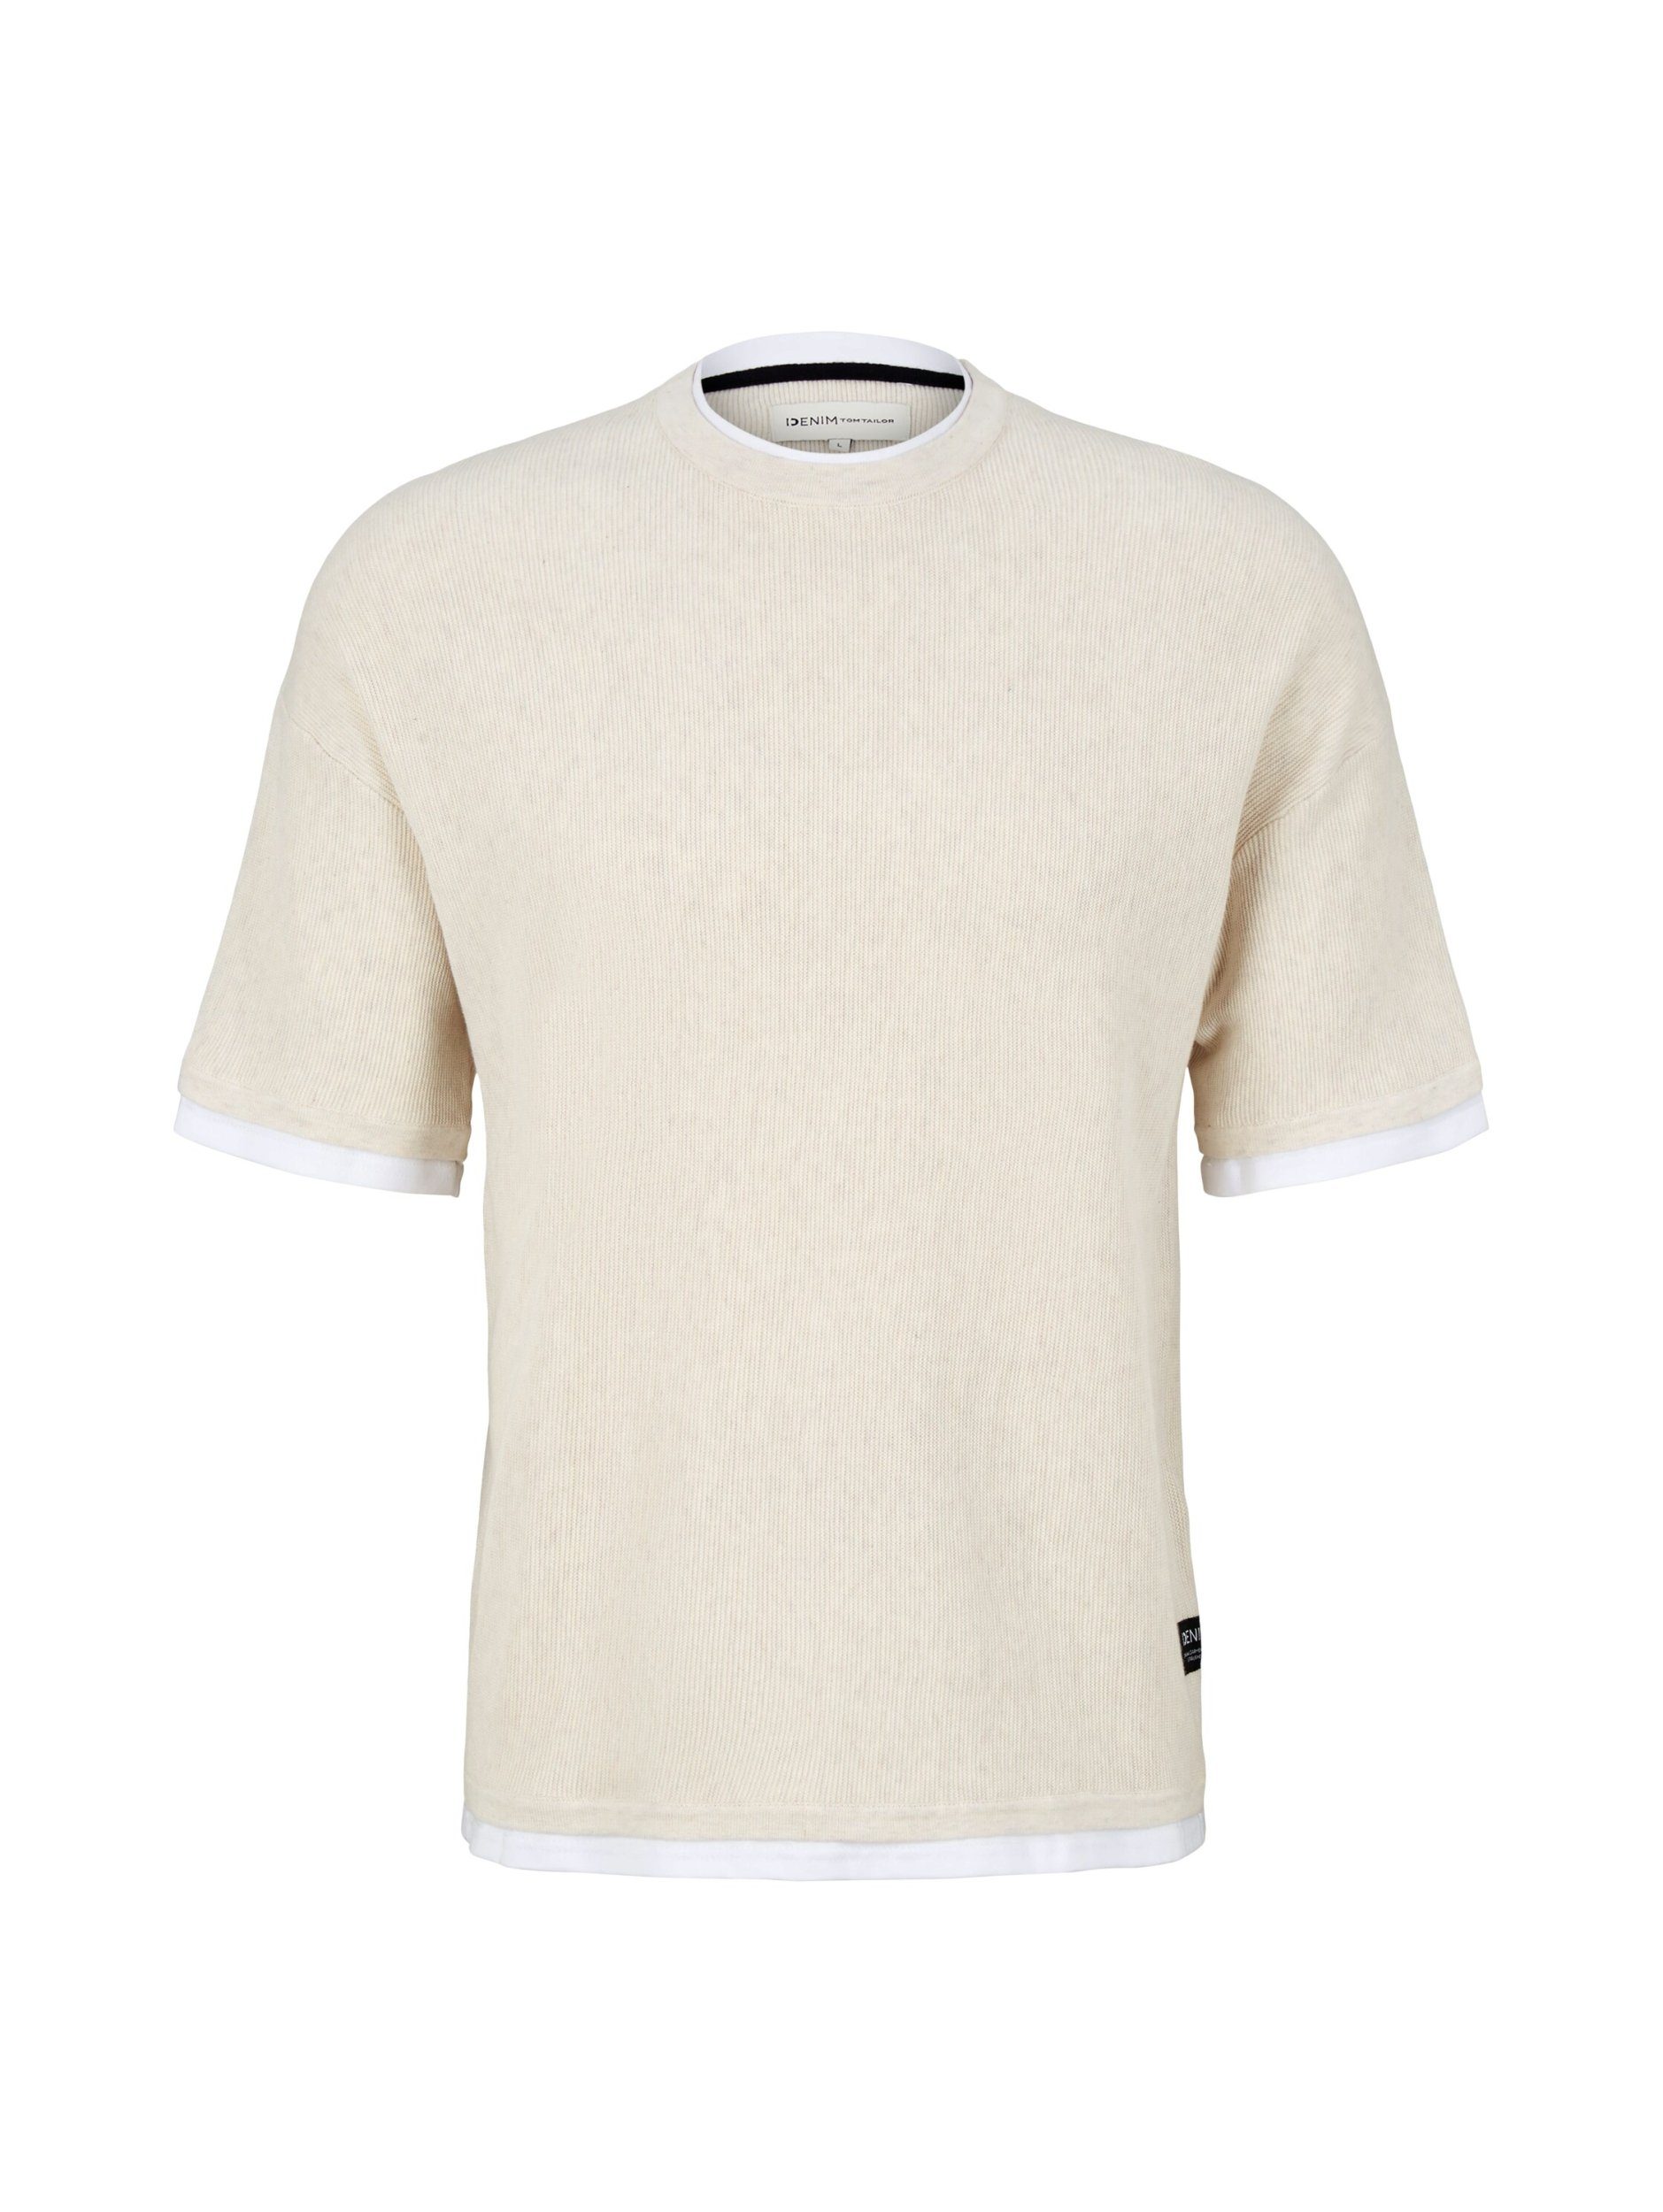 TOM TAILOR Denim Kurzarmshirt structured short sleeve crew natur | T-Shirts